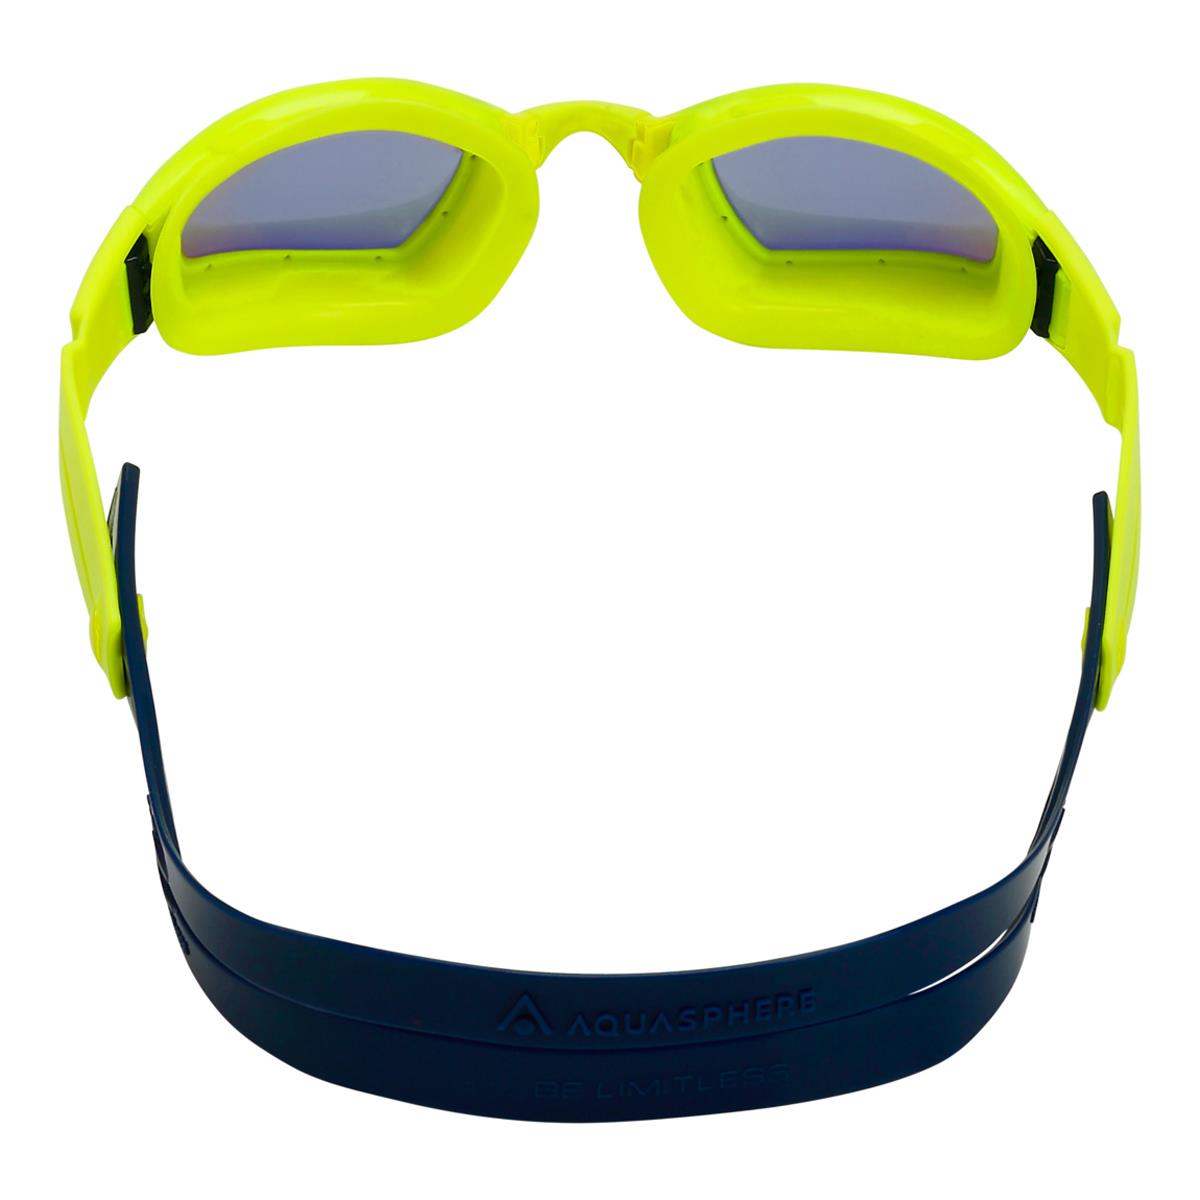 Aqua Sphere Ninja Yellow Titanium zrcalna očala - Strela val